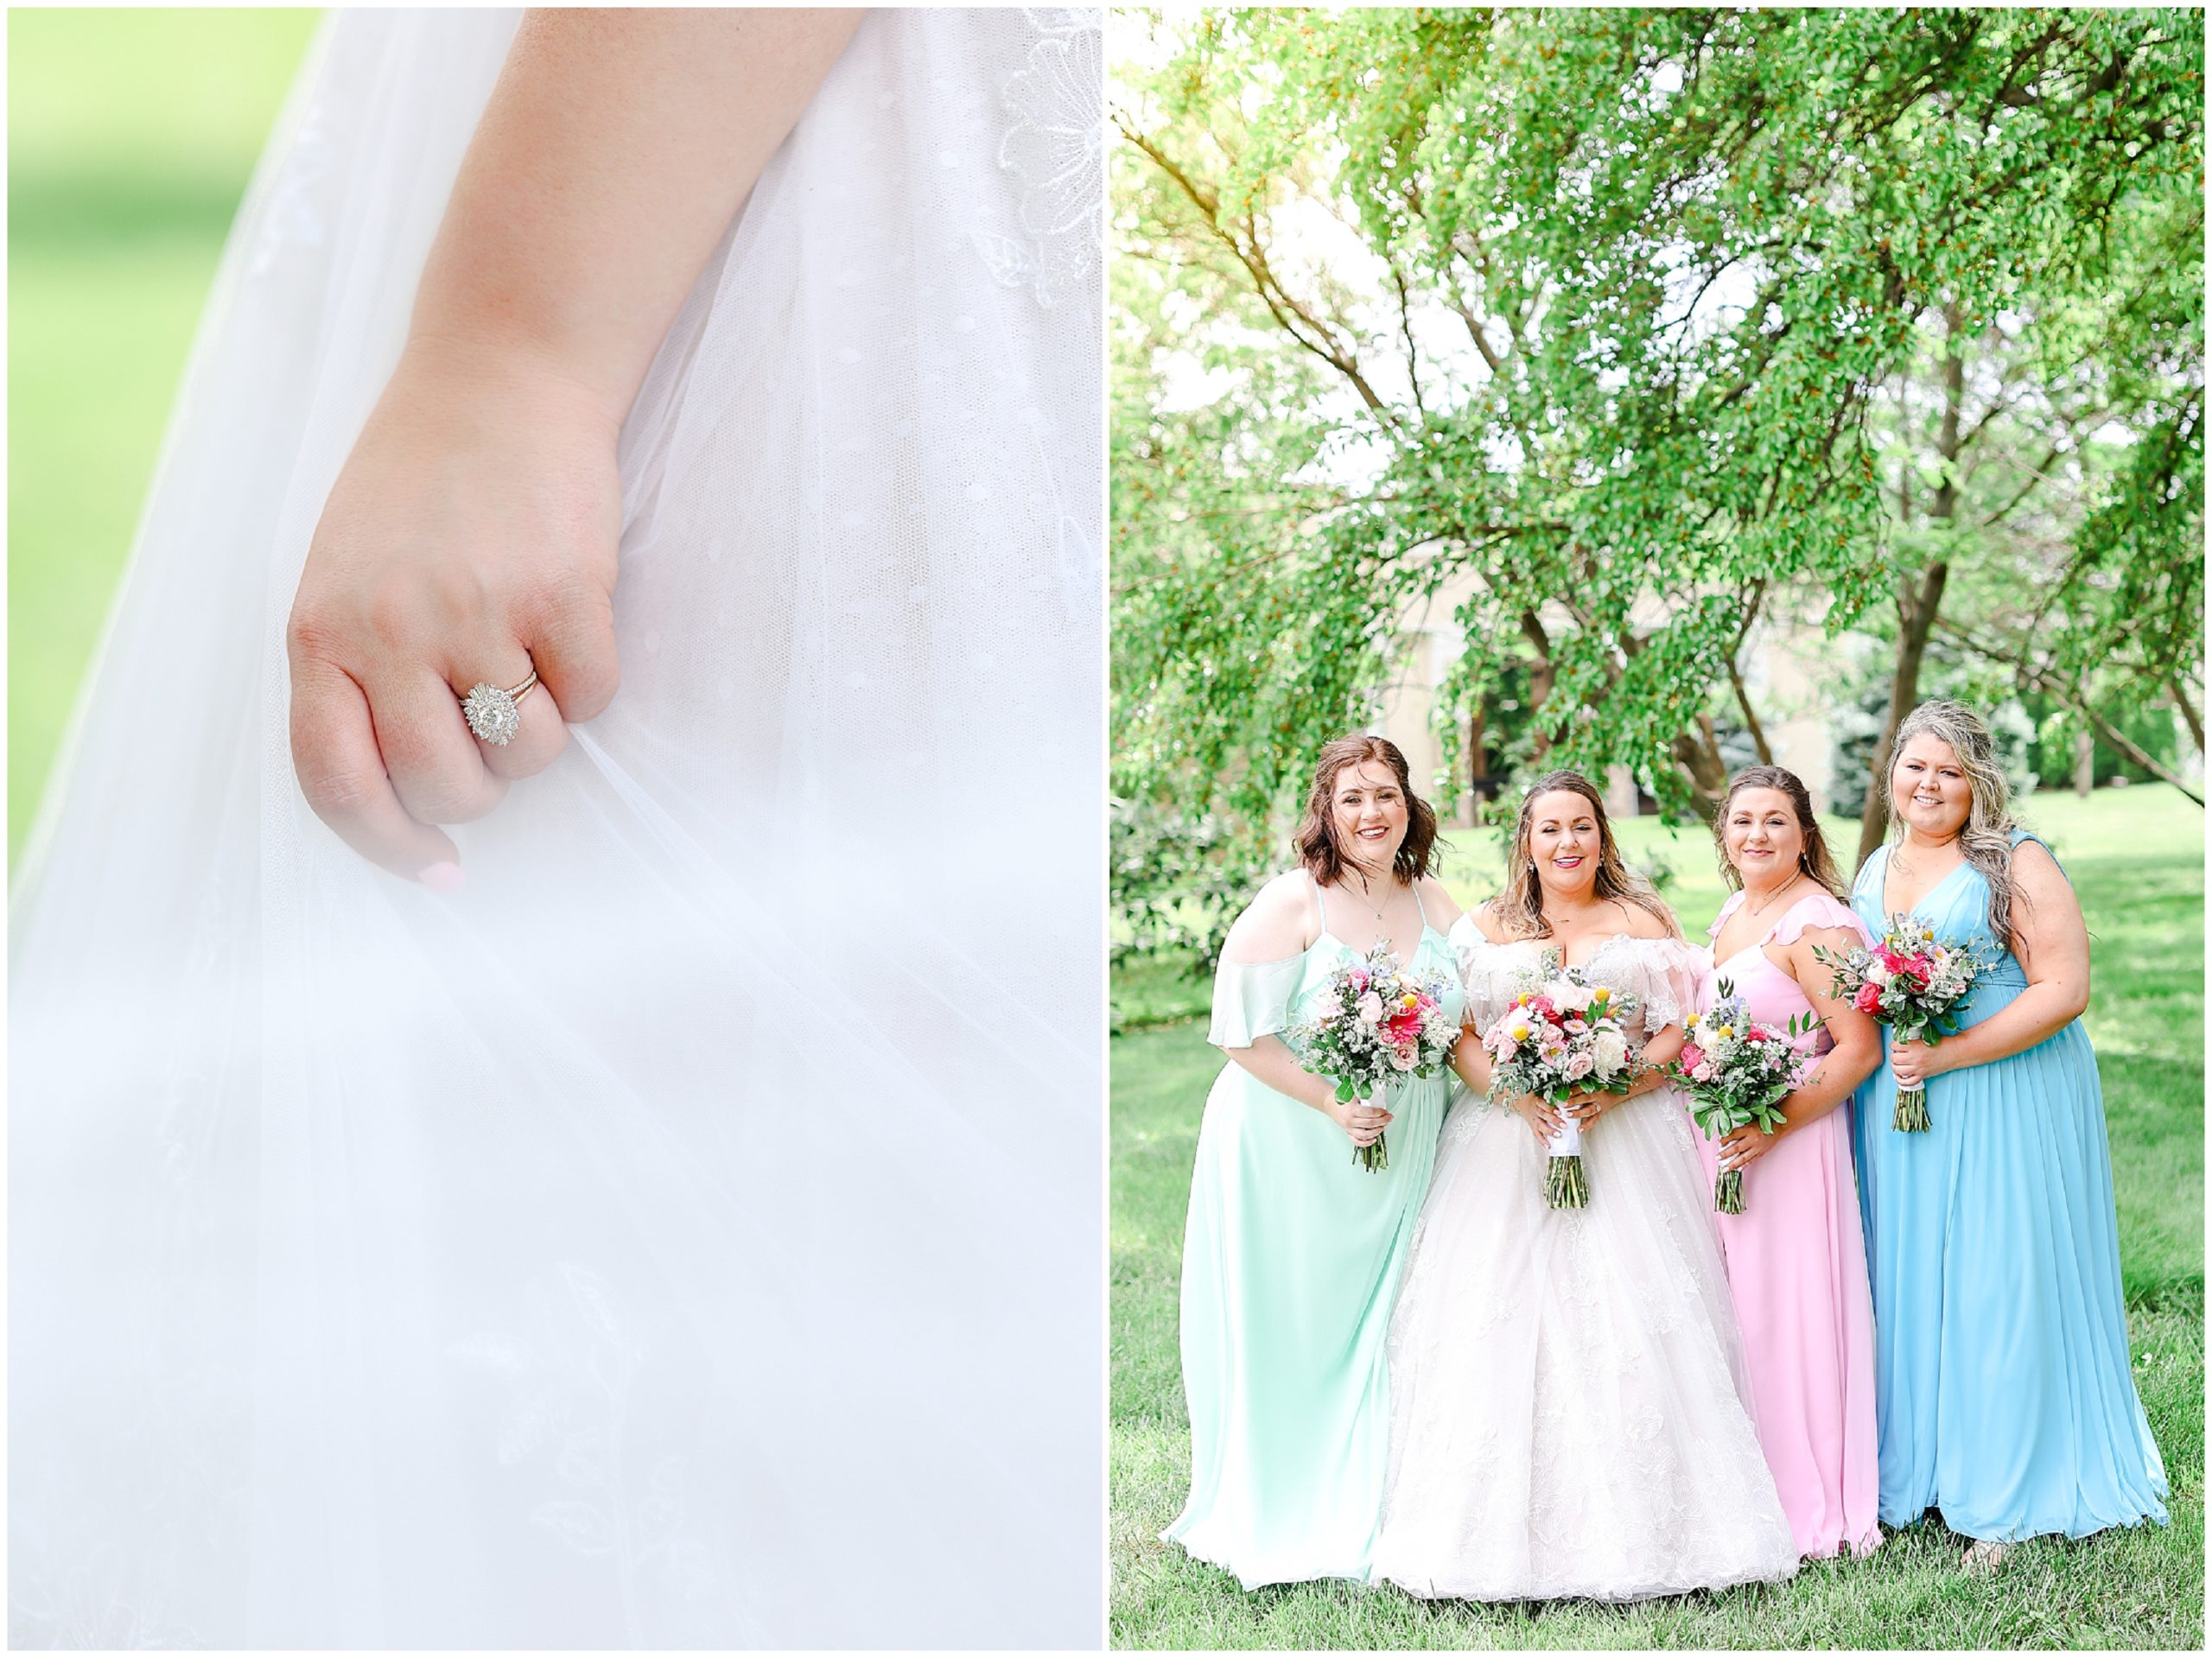 Colorful and Joyful Wedding Photography - Kansas City Wedding Photographer - The Rhapsody - bride and groom wedding portraits - colorful bridal party portraits